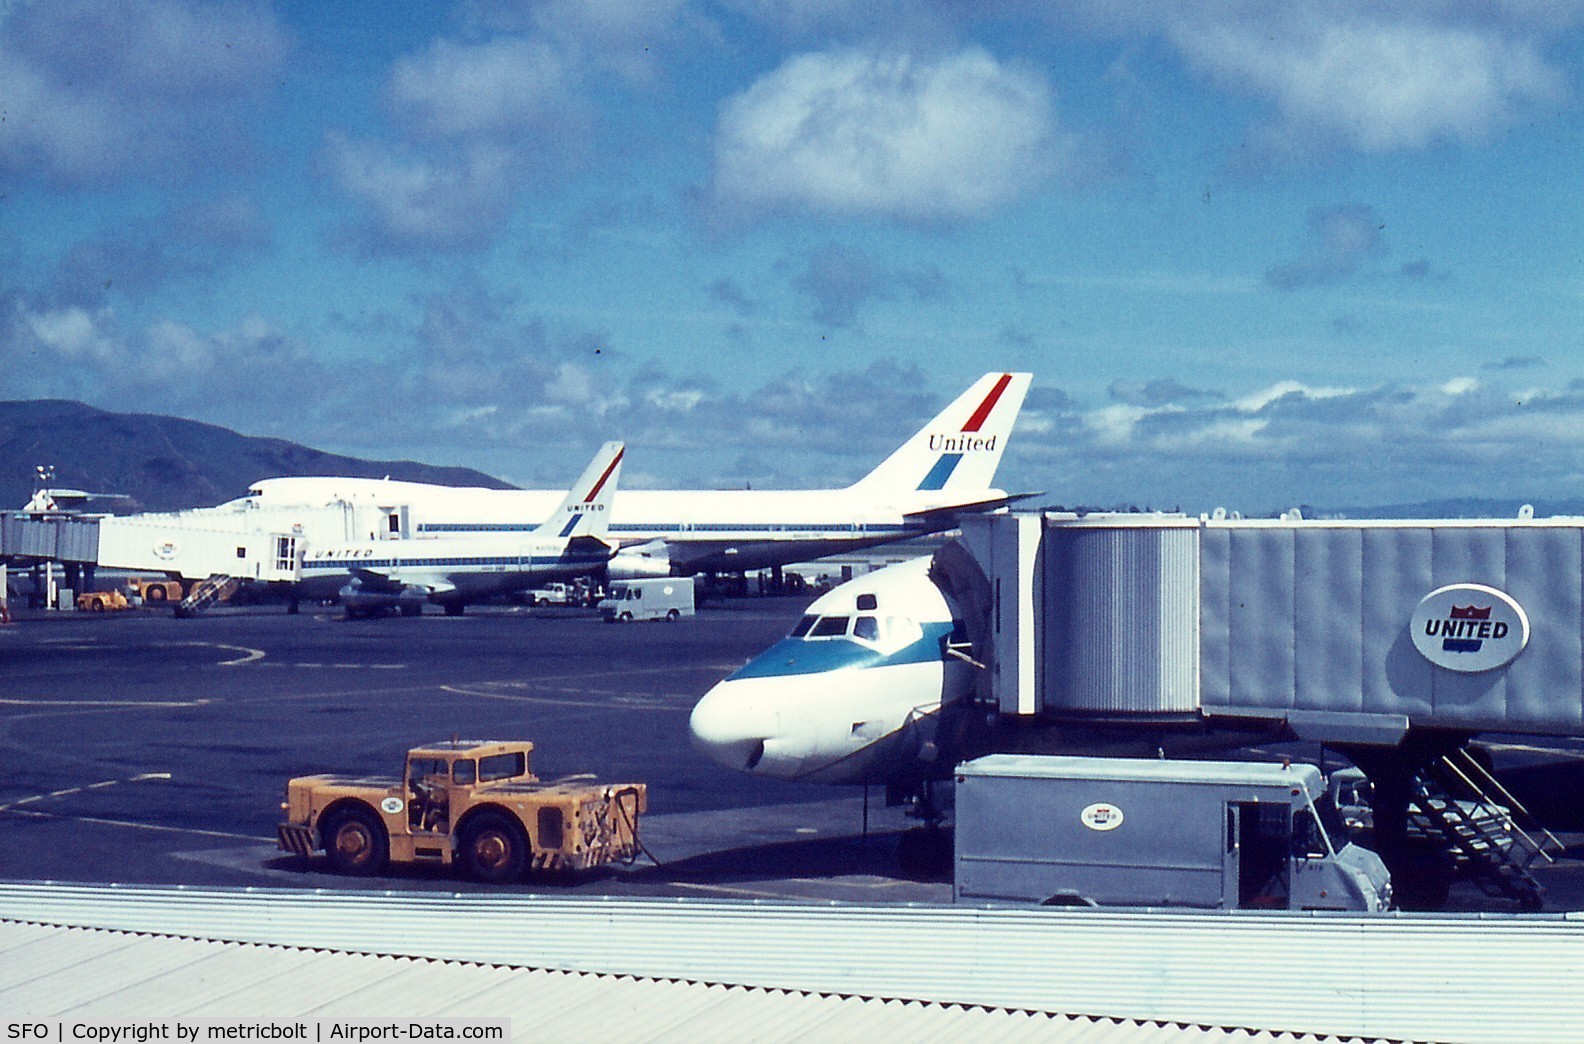 San Francisco International Airport (SFO) - UAL DC-8,B737 and B747 in SFO,early 70s